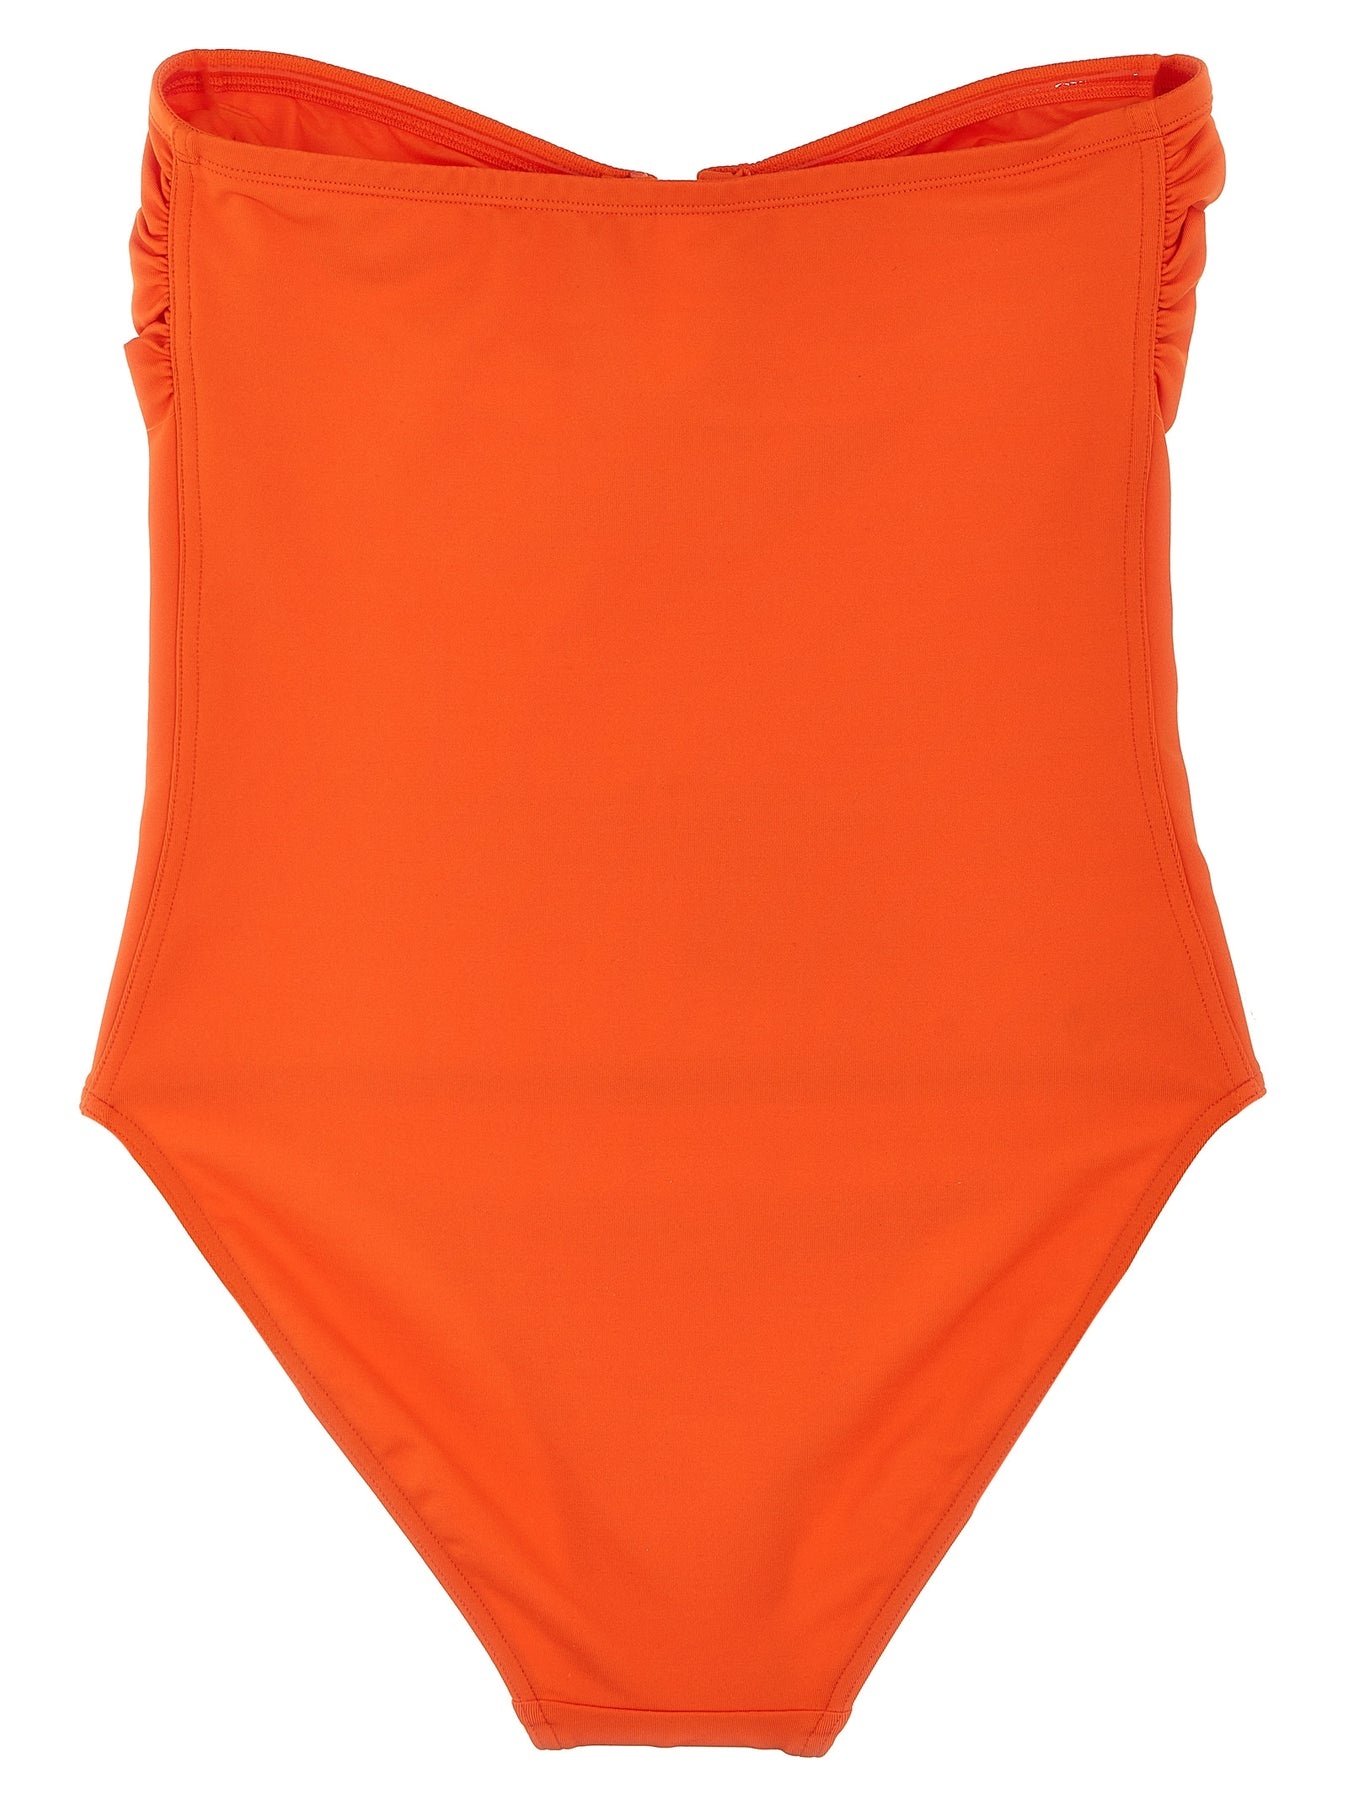 Cassiopee Beachwear Orange - 2